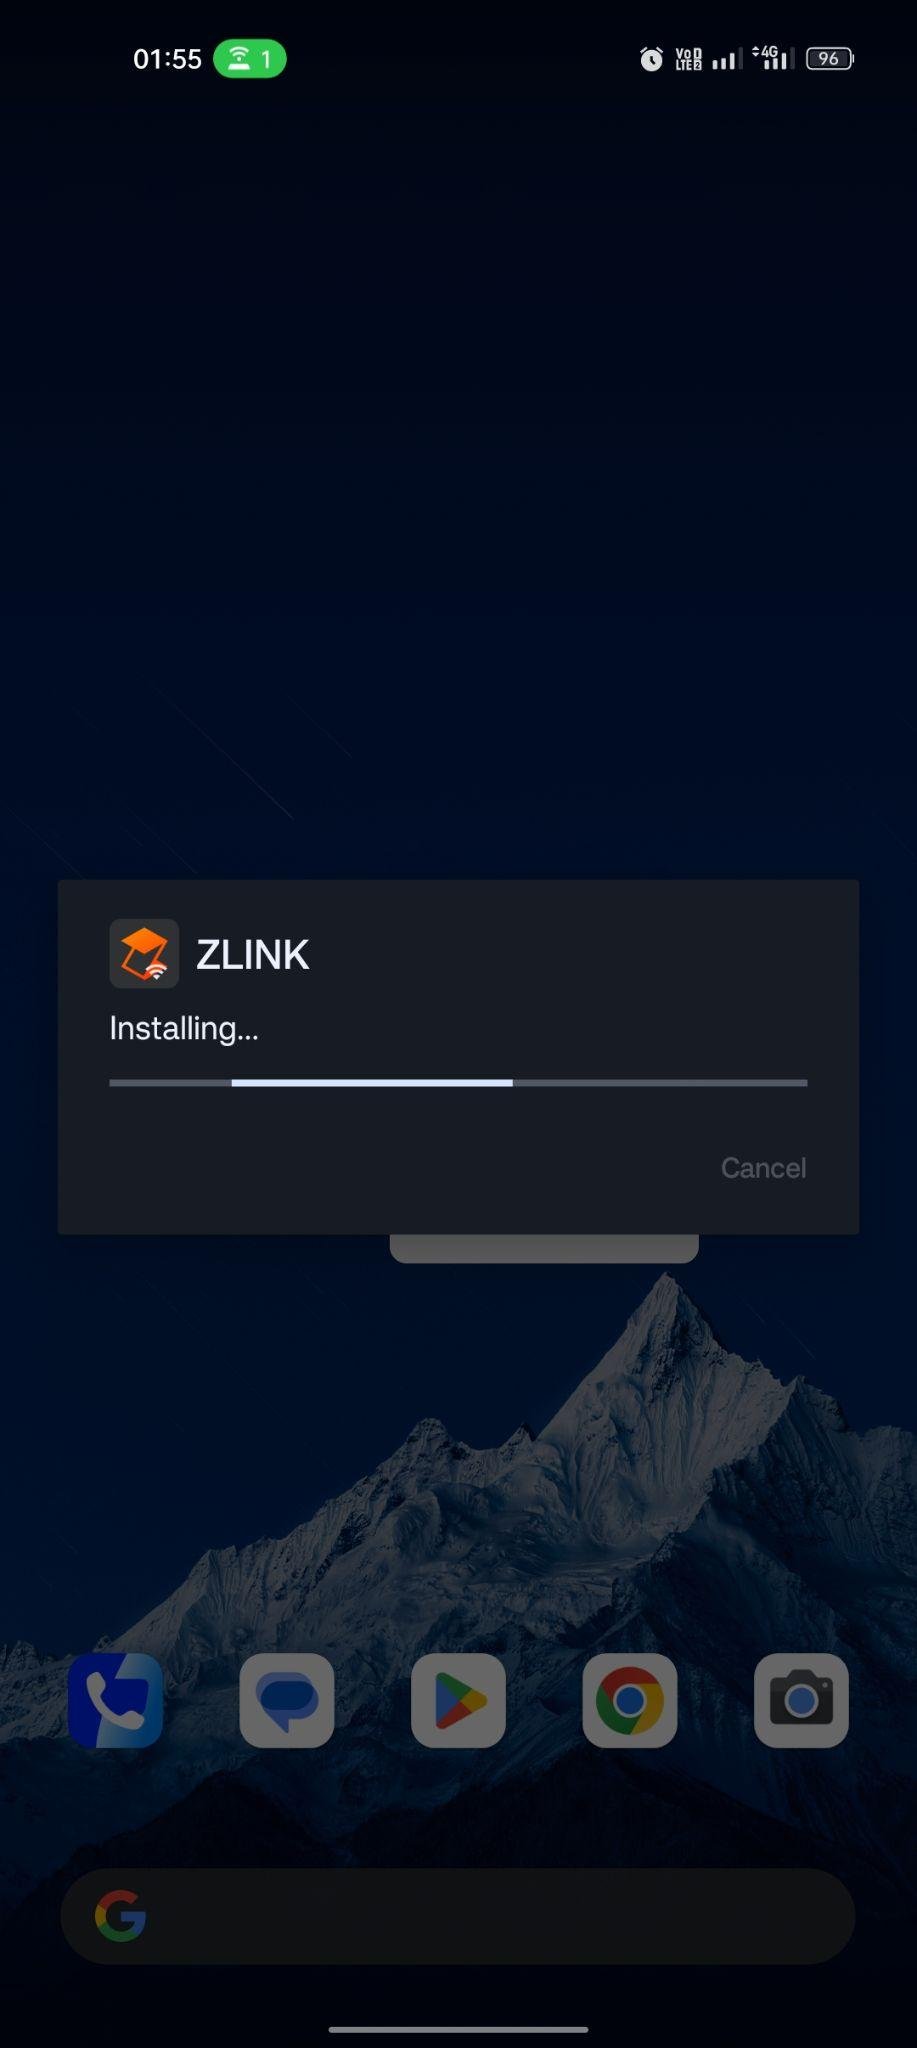 ZLINK apk installing